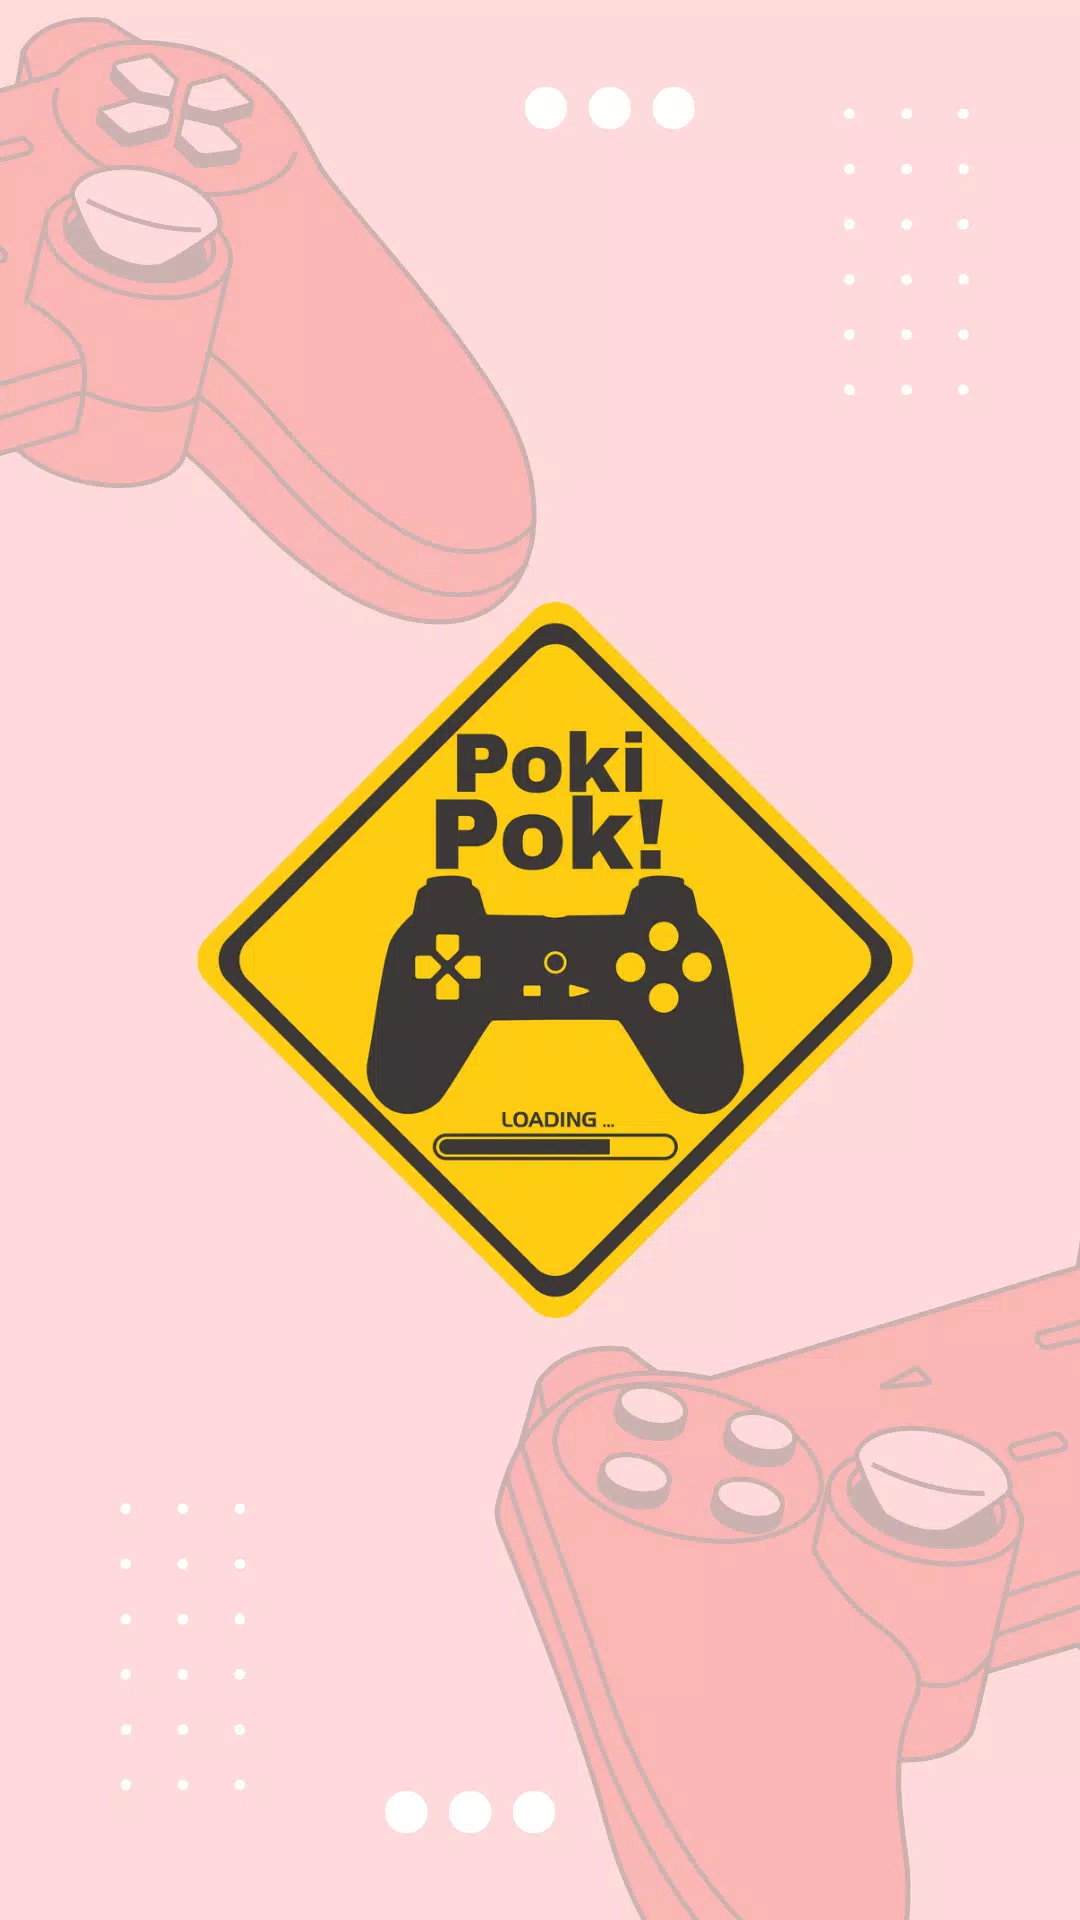 Poki Kids APK (Android Game) - Baixar Grátis